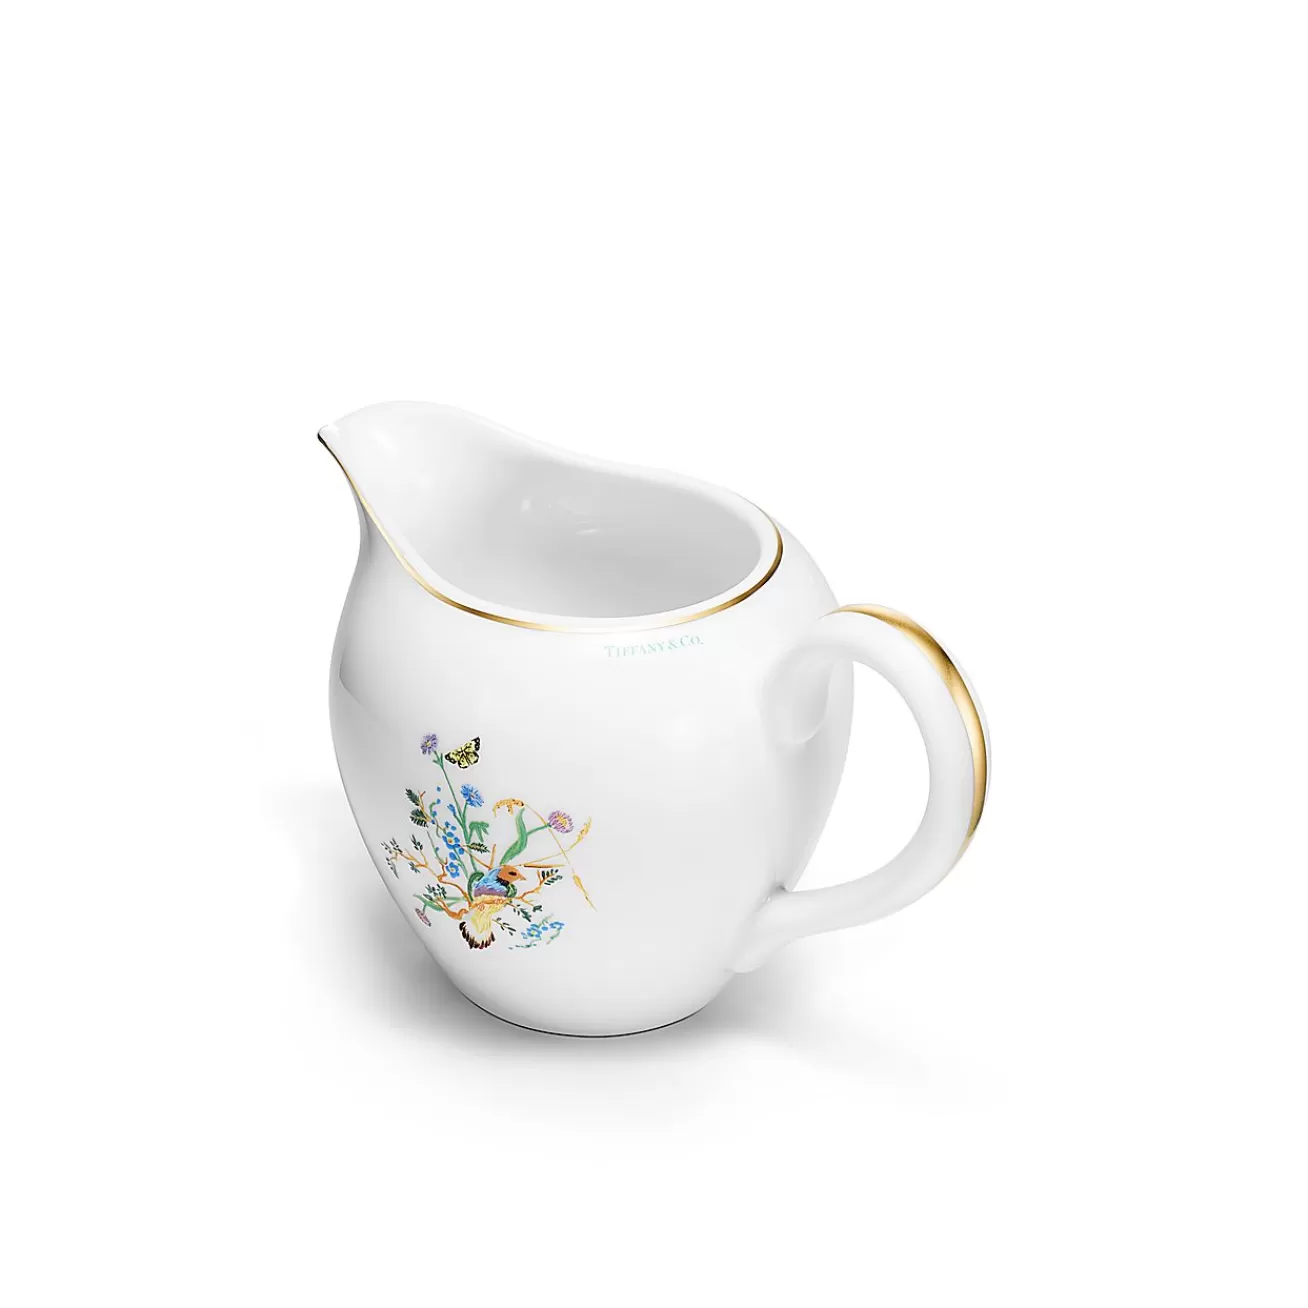 Tiffany & Co. Tiffany Jardin Creamer in Porcelain | ^ The Home | Housewarming Gifts